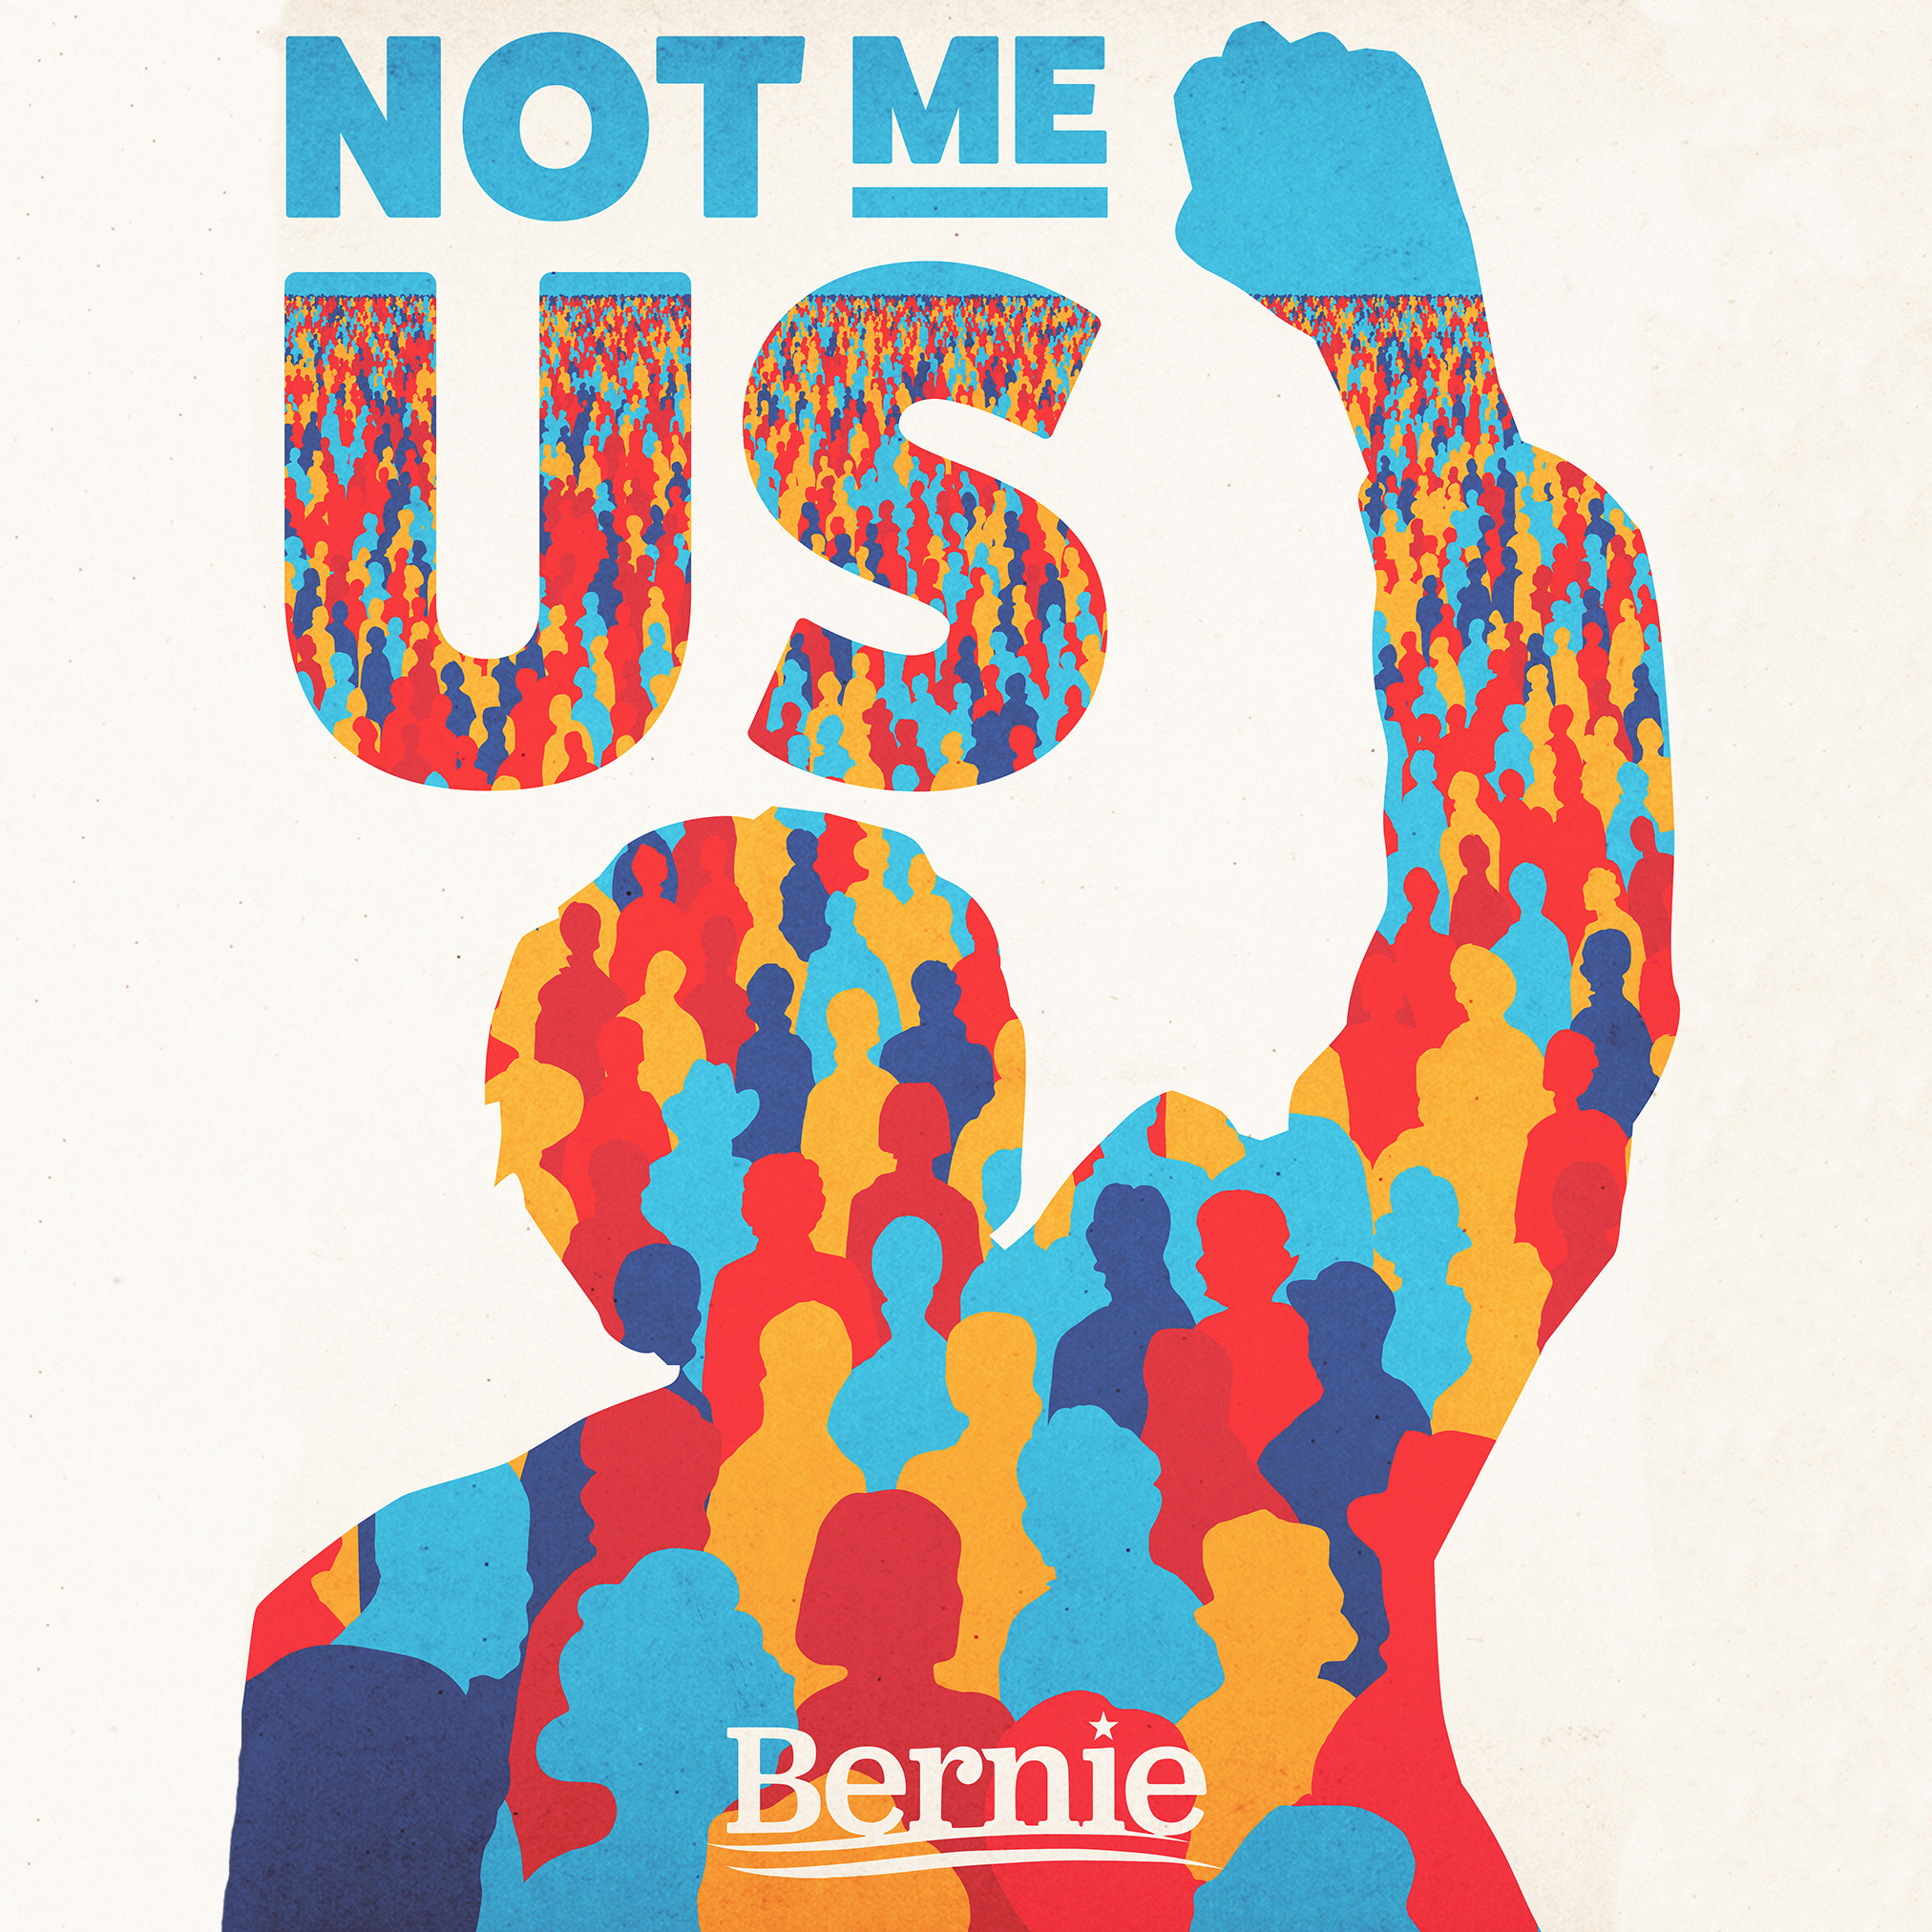 Bernie Sanders, grassroots candidates Bernie candidates, Sanders supporters, political revolution